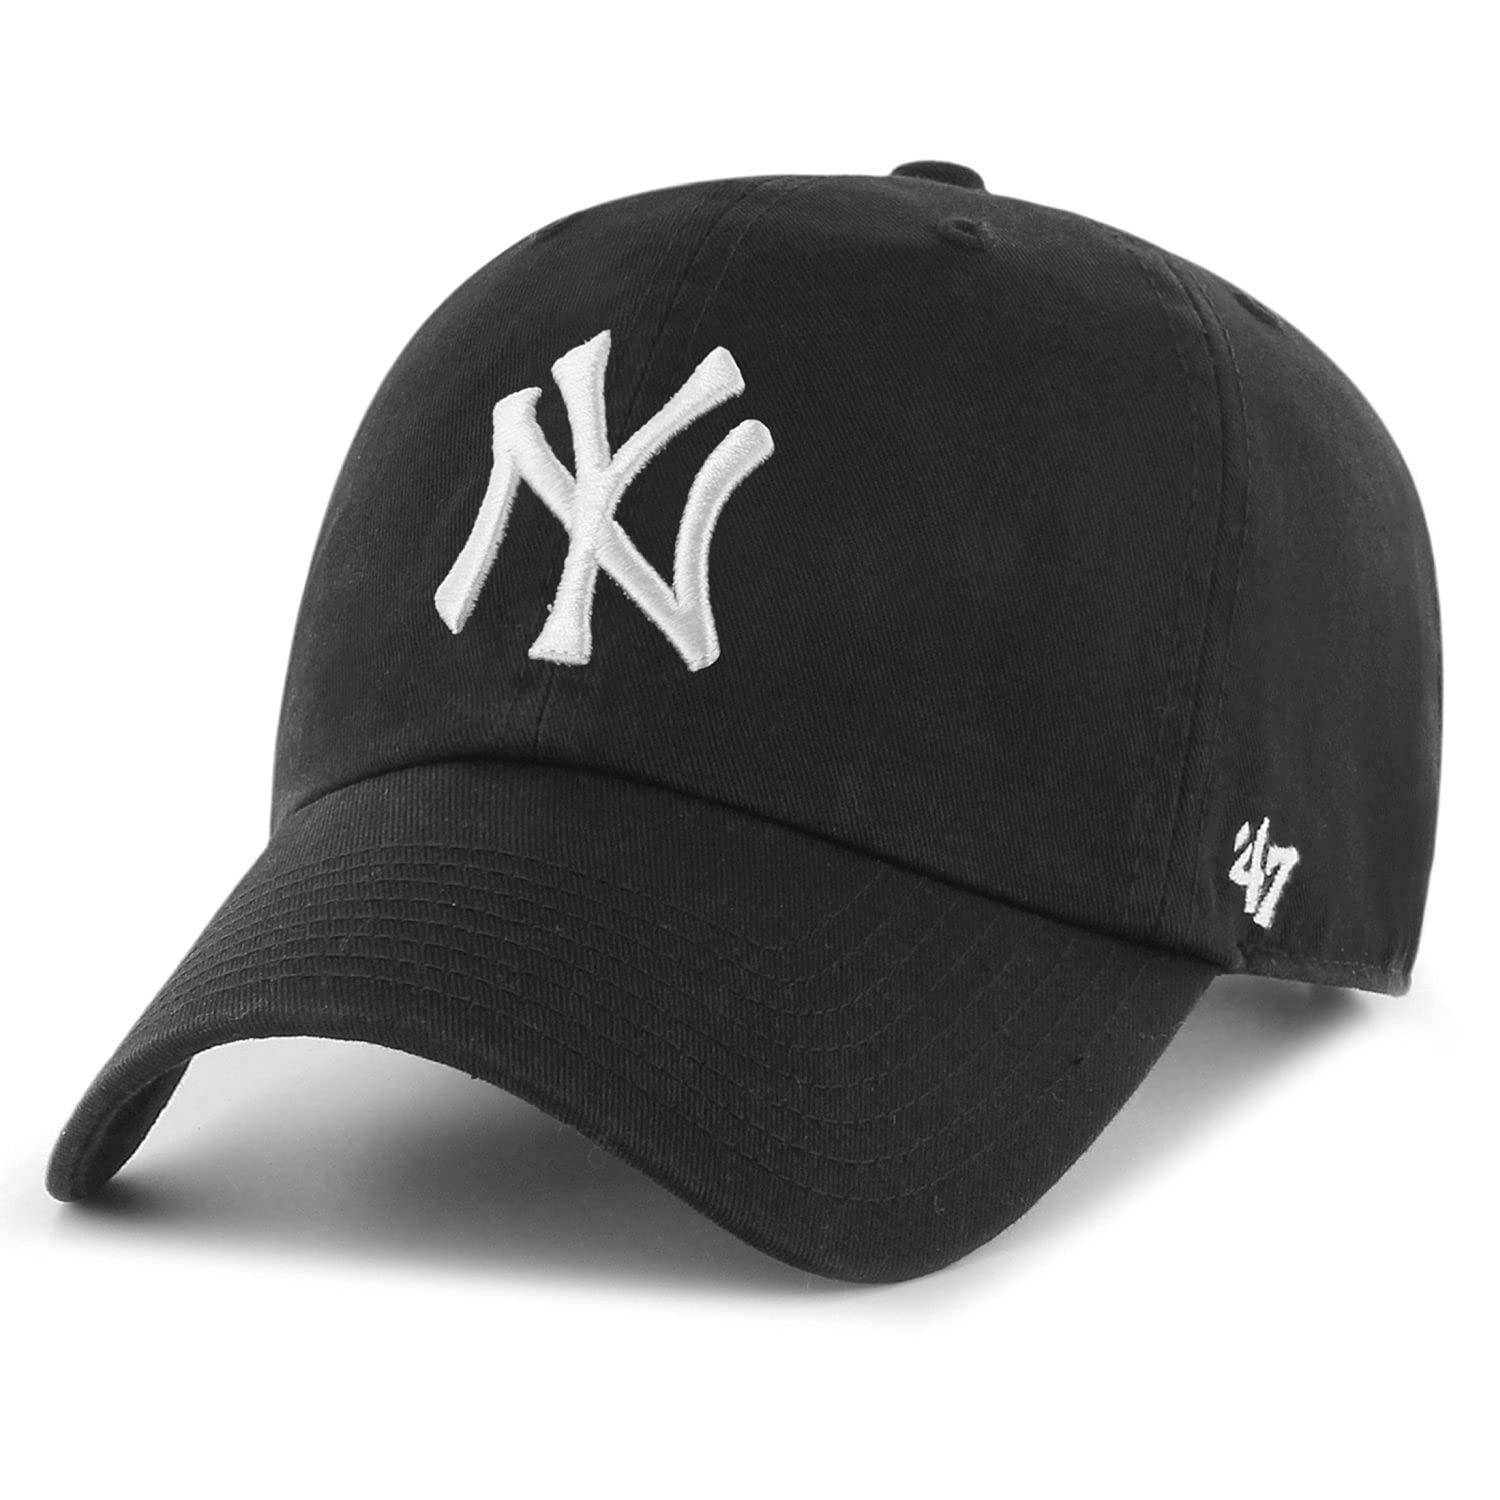 Mũ MLB  New Era NY Basic Black On White Ball Cap 12836296  CITISHOP